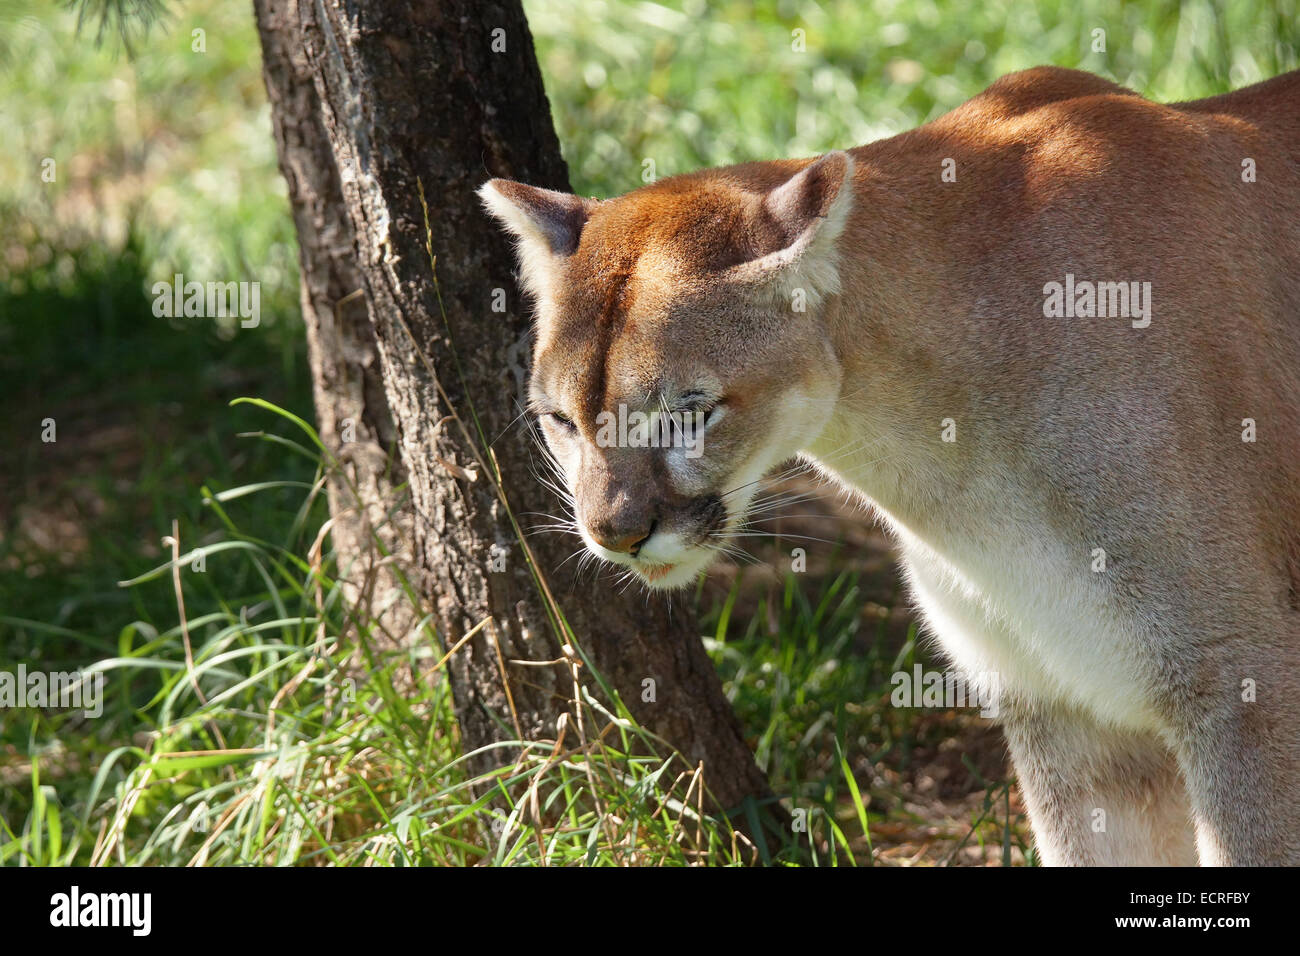 Wildcat or puma,Puma concolor, in shady natural habitat Stock Photo - Alamy